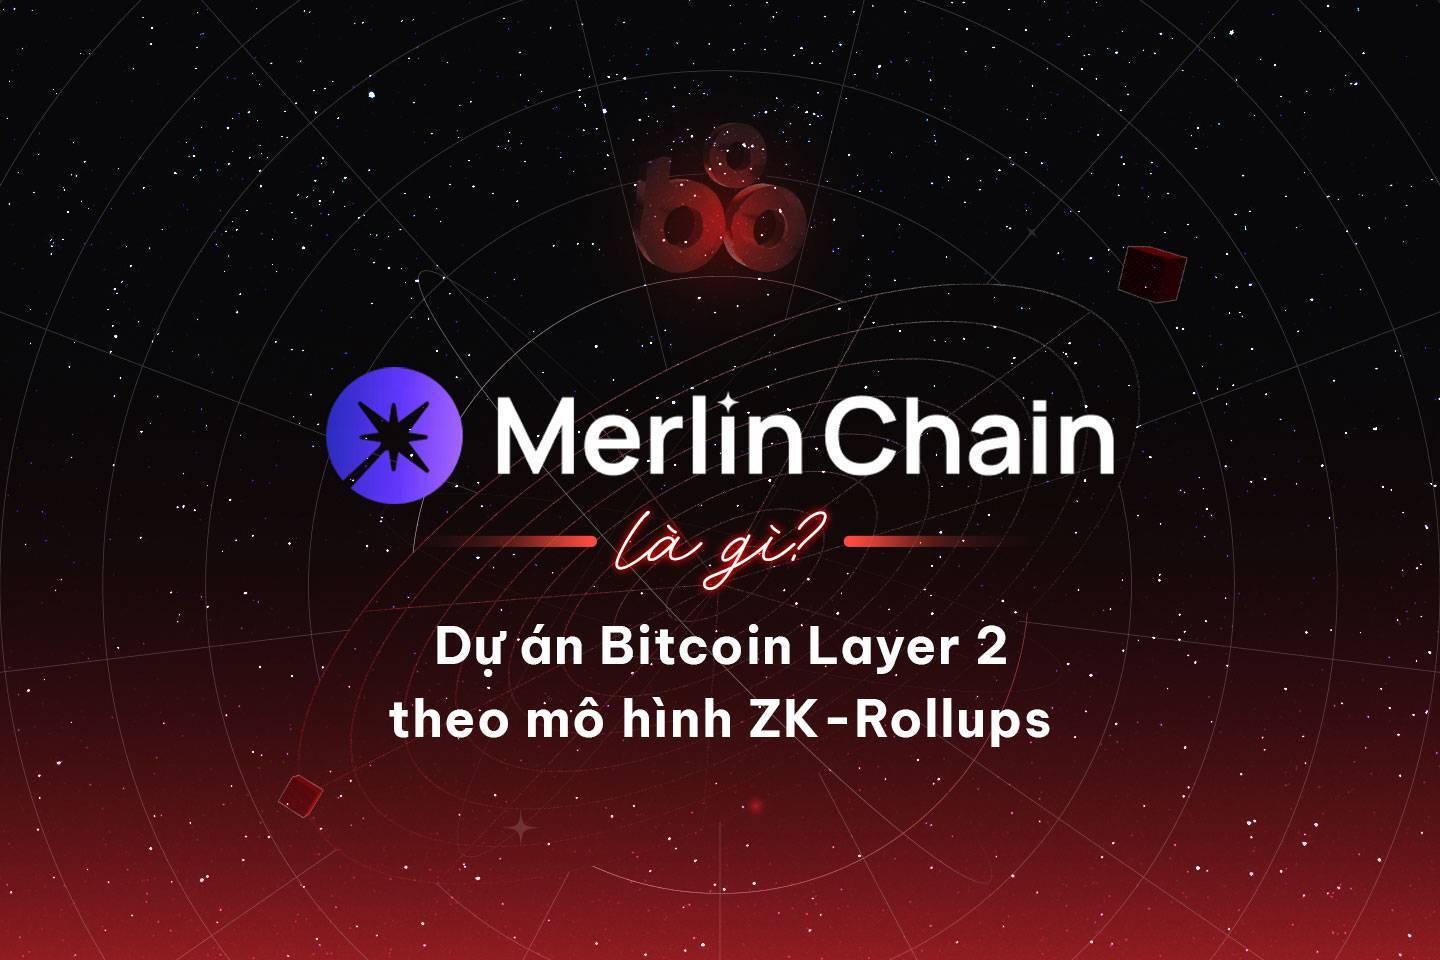 merlin-chain-merl-la-gi-tim-hieu-ve-du-an-bitcoin-layer-2-theo-mo-hinh-zk-rollups